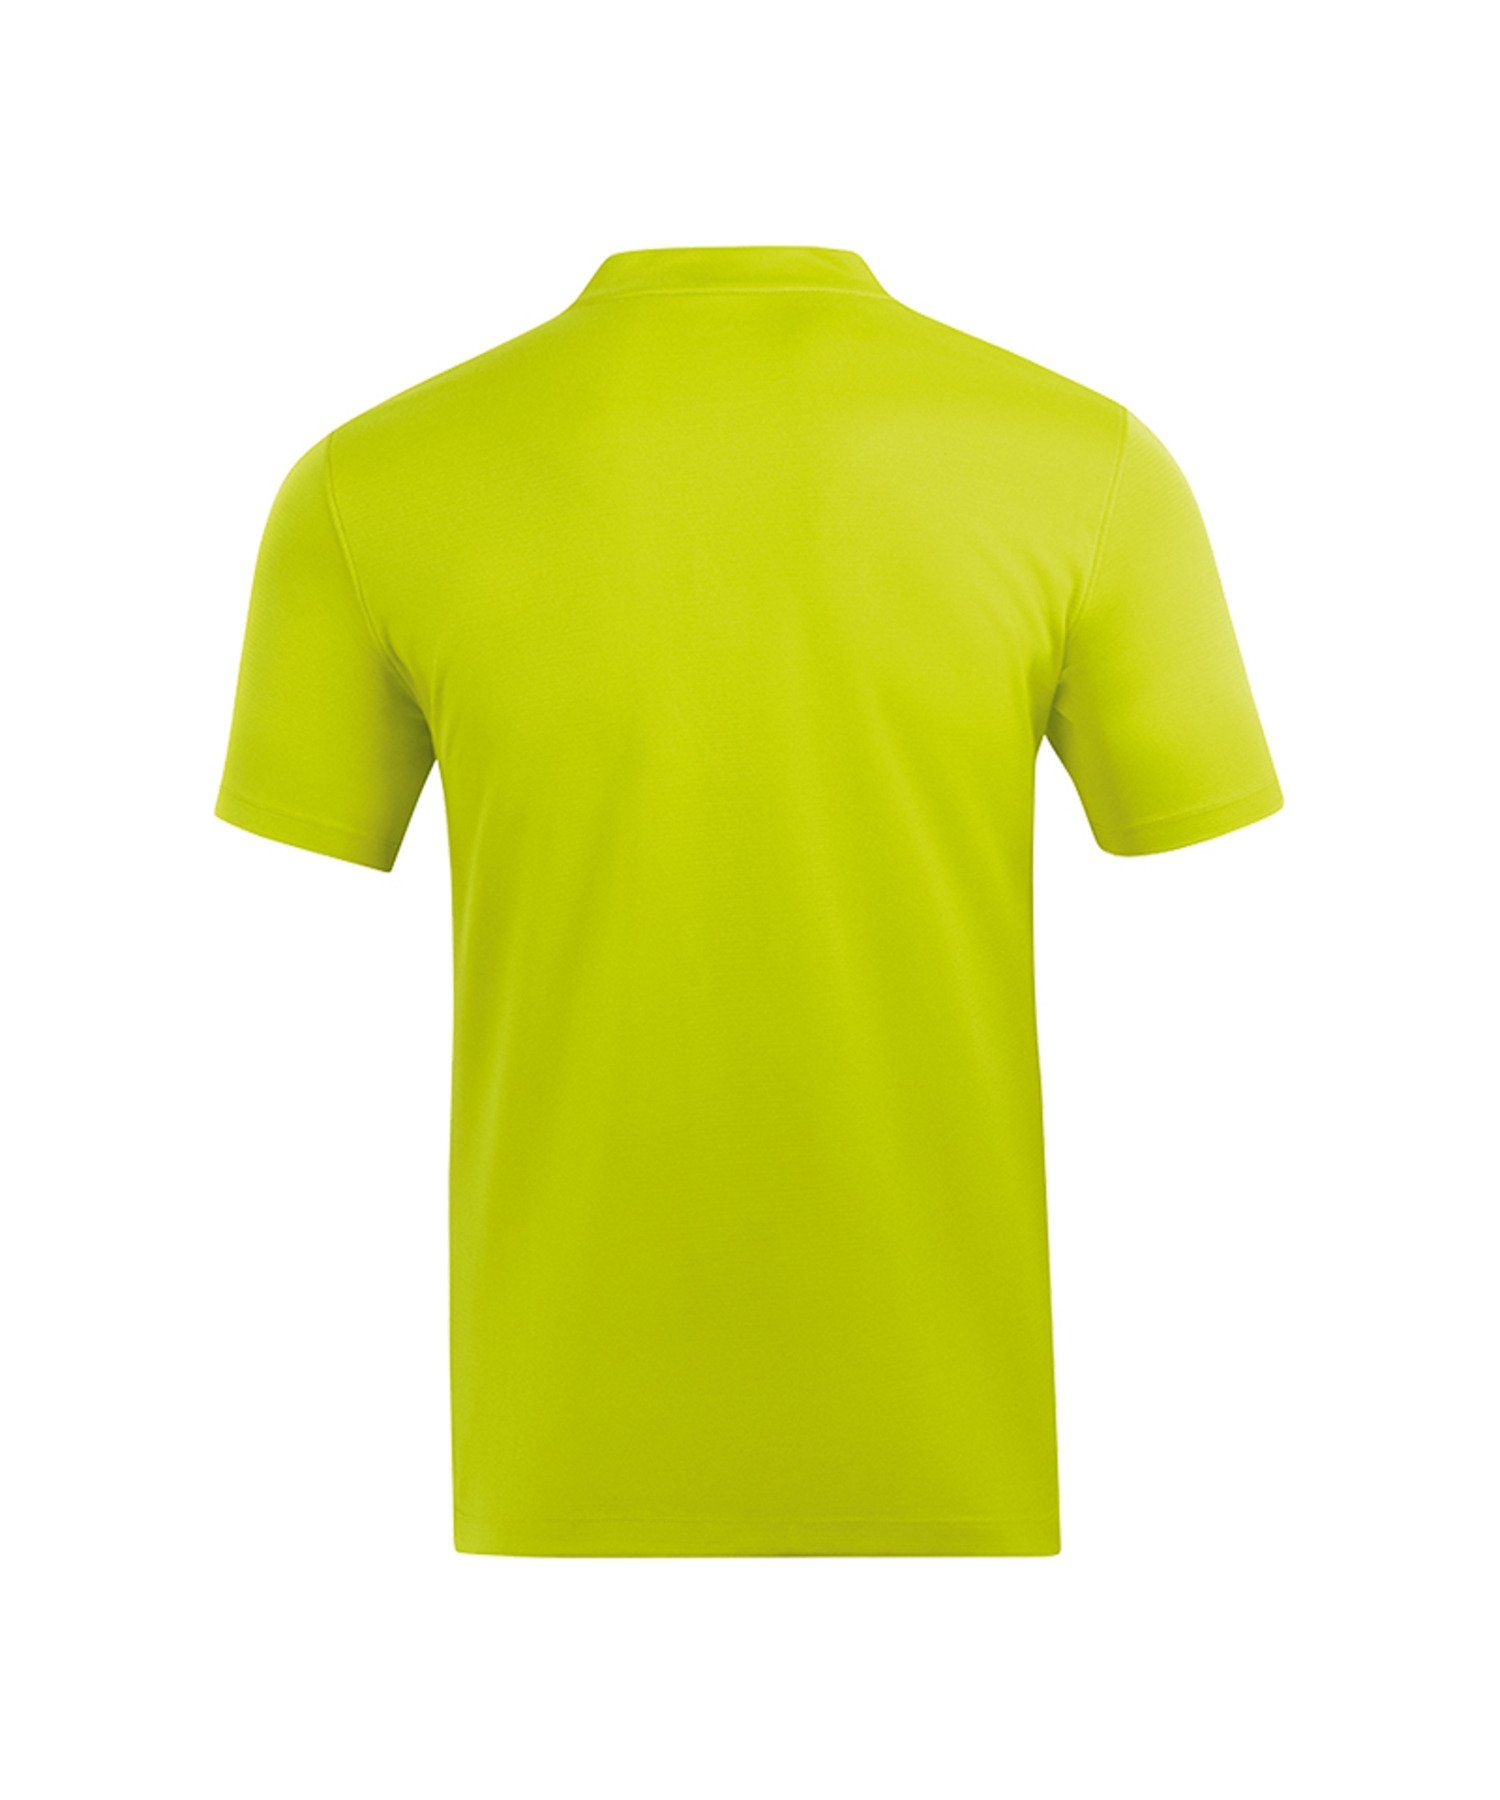 Prestige Poloshirt T-Shirt Gelb Jako default